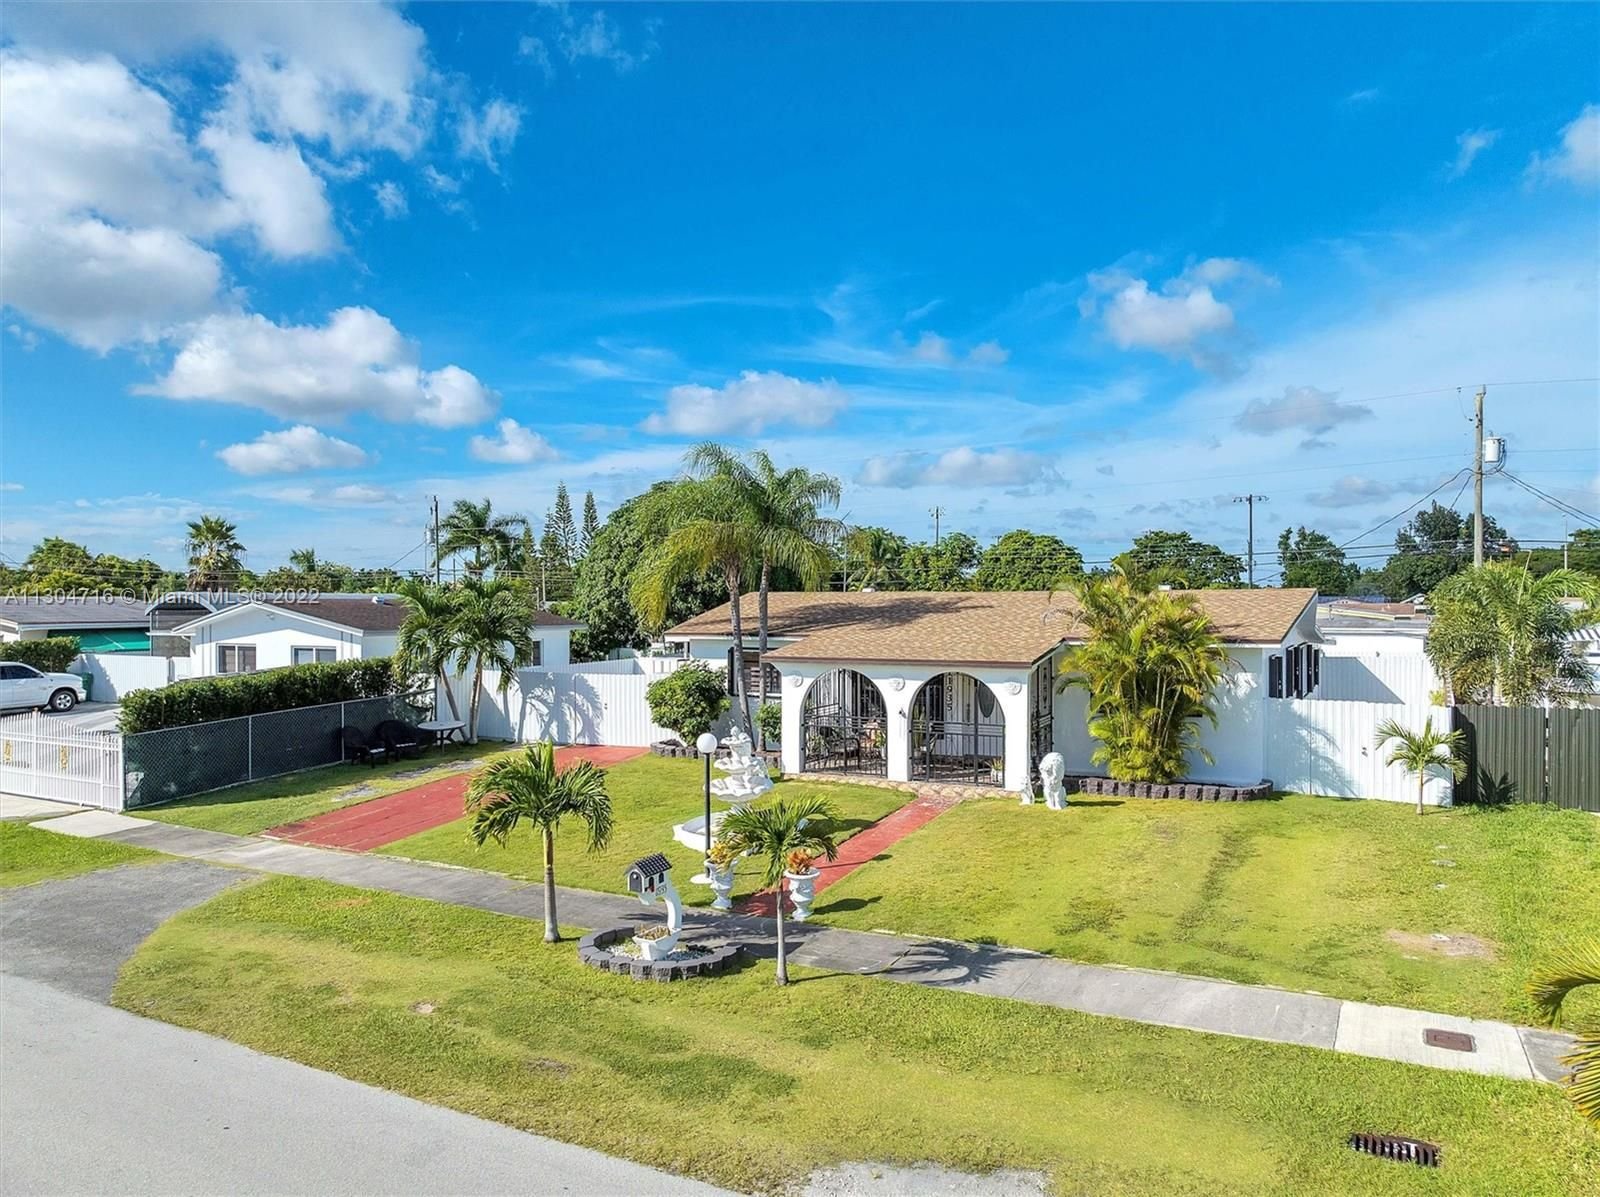 Real estate property located at 11935 185th Ter, Miami-Dade County, Miami, FL